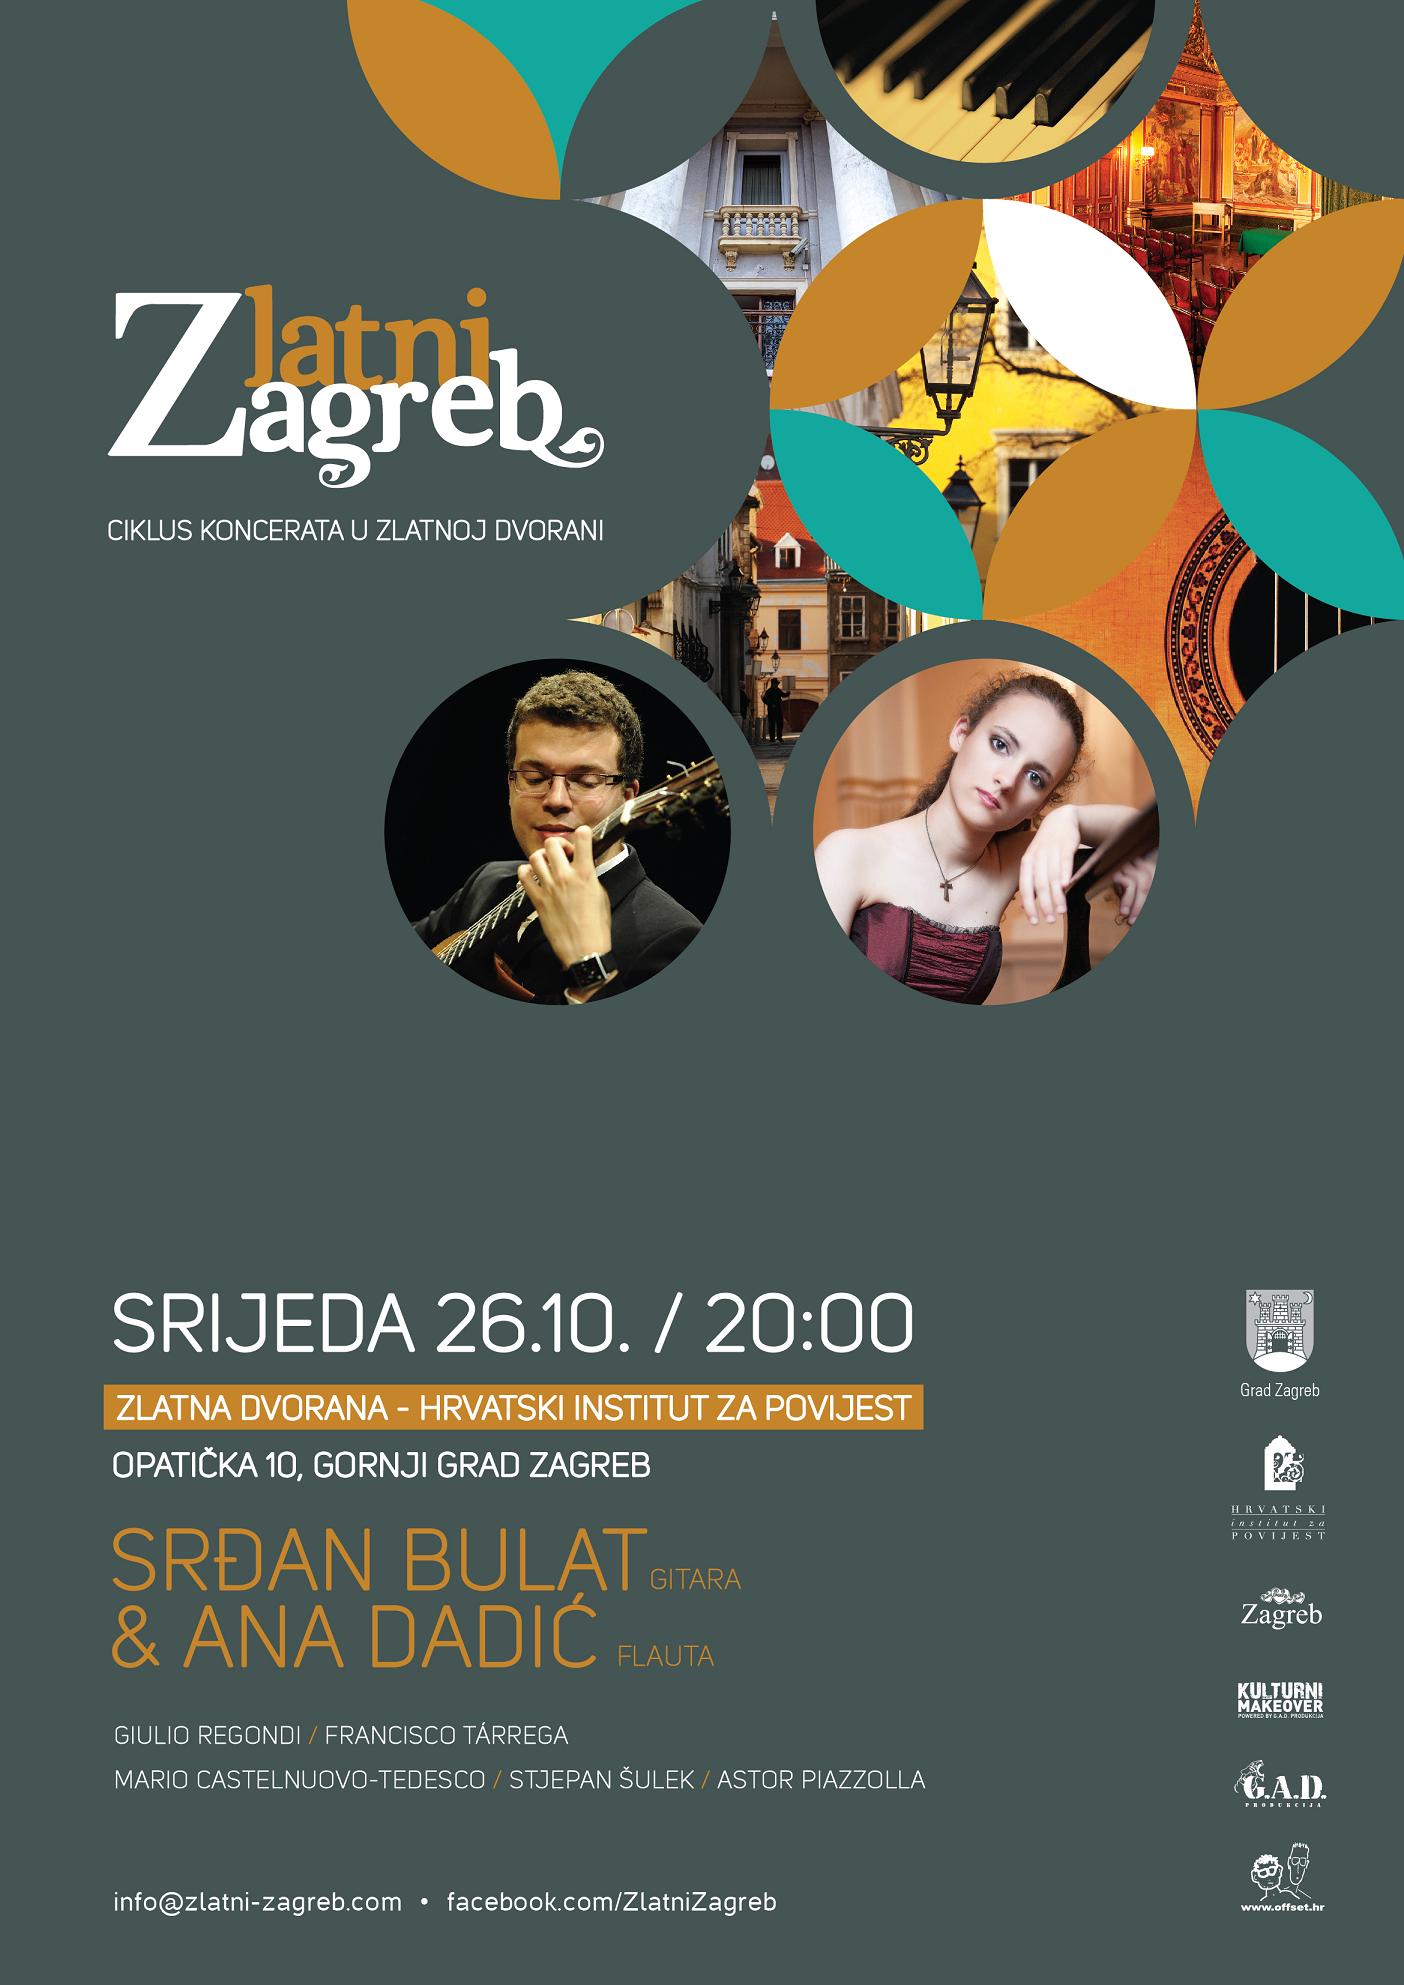 01 ZLATNI ZAGREB 2. koncert VIZUAL